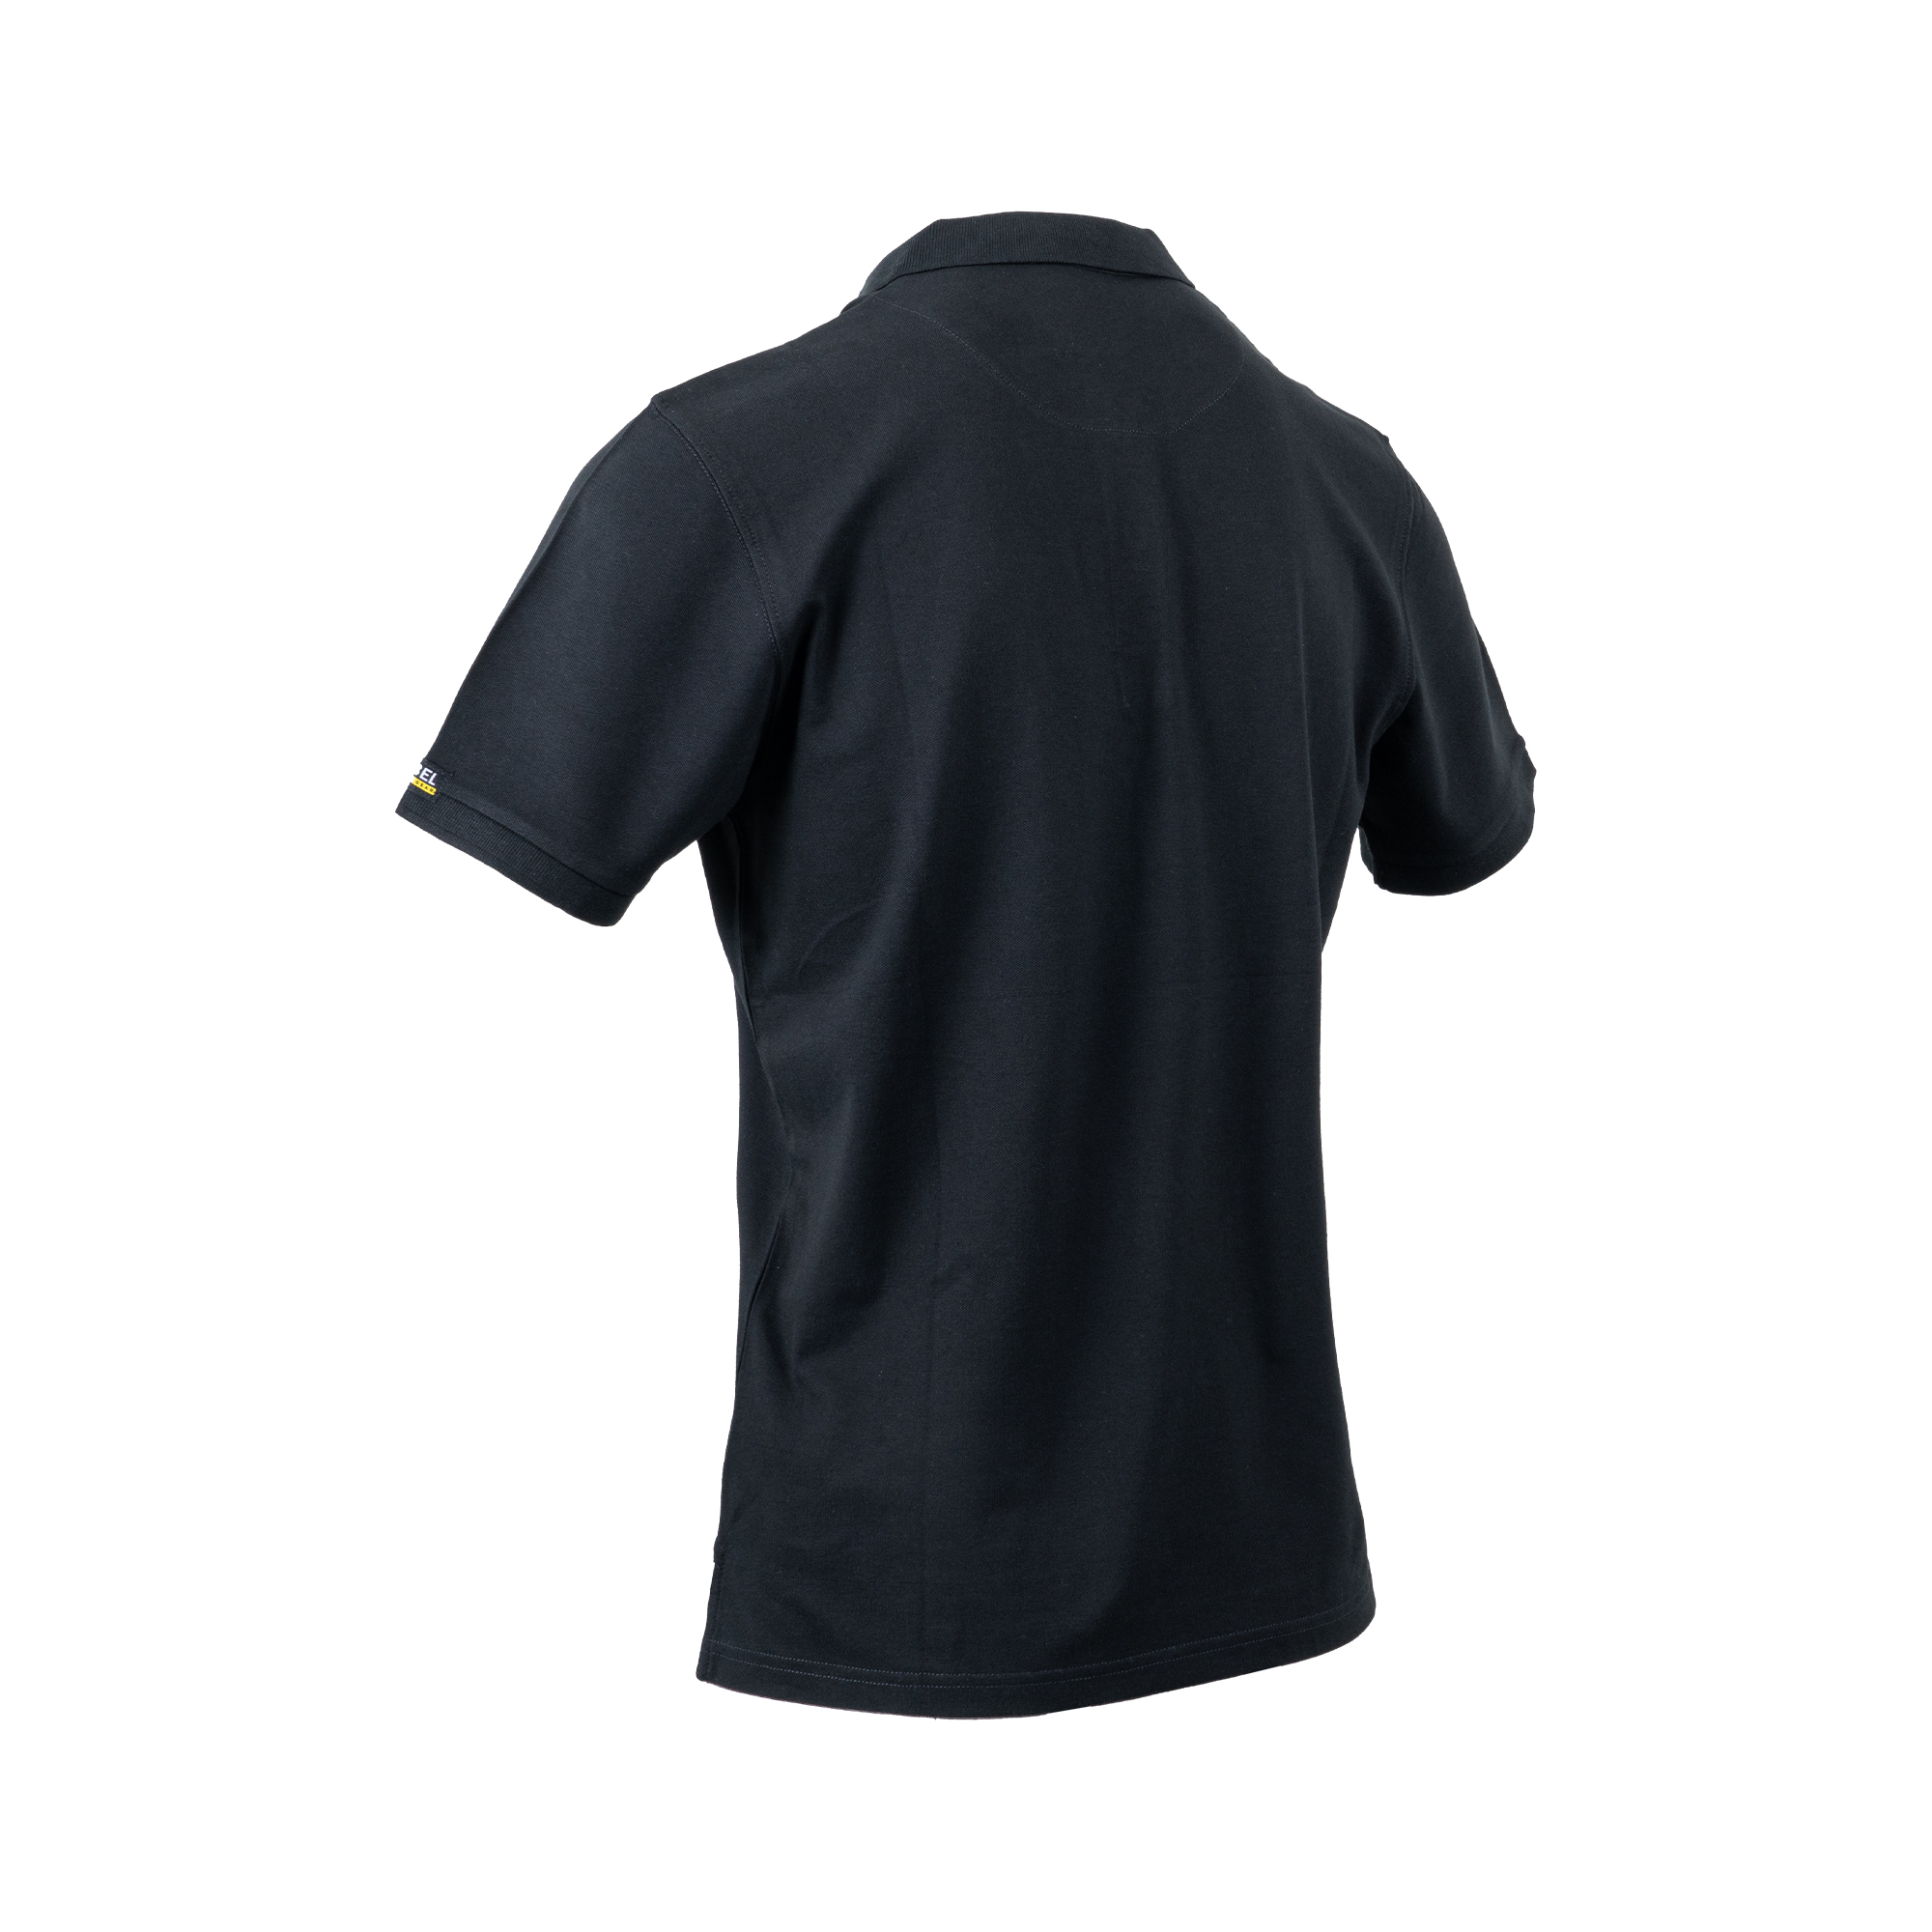 REBEL Work Wear Golf Shirt Black - REBEL Safety Gear